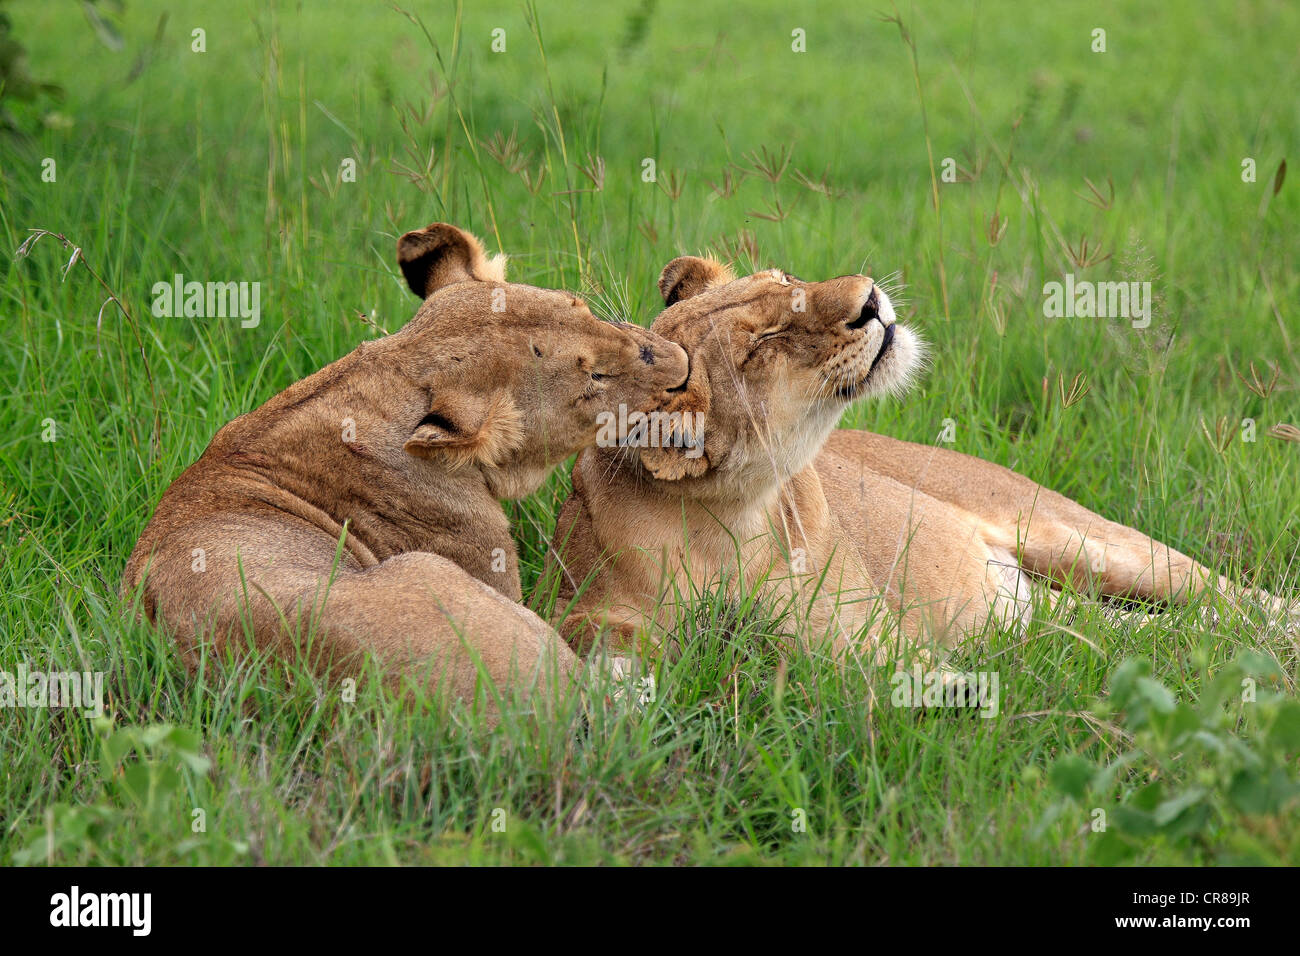 Deux Lionnes (Panthera leo), le comportement social, Sabi Sabi Game Reserve, Kruger National Park, Afrique du Sud, l'Afrique Banque D'Images